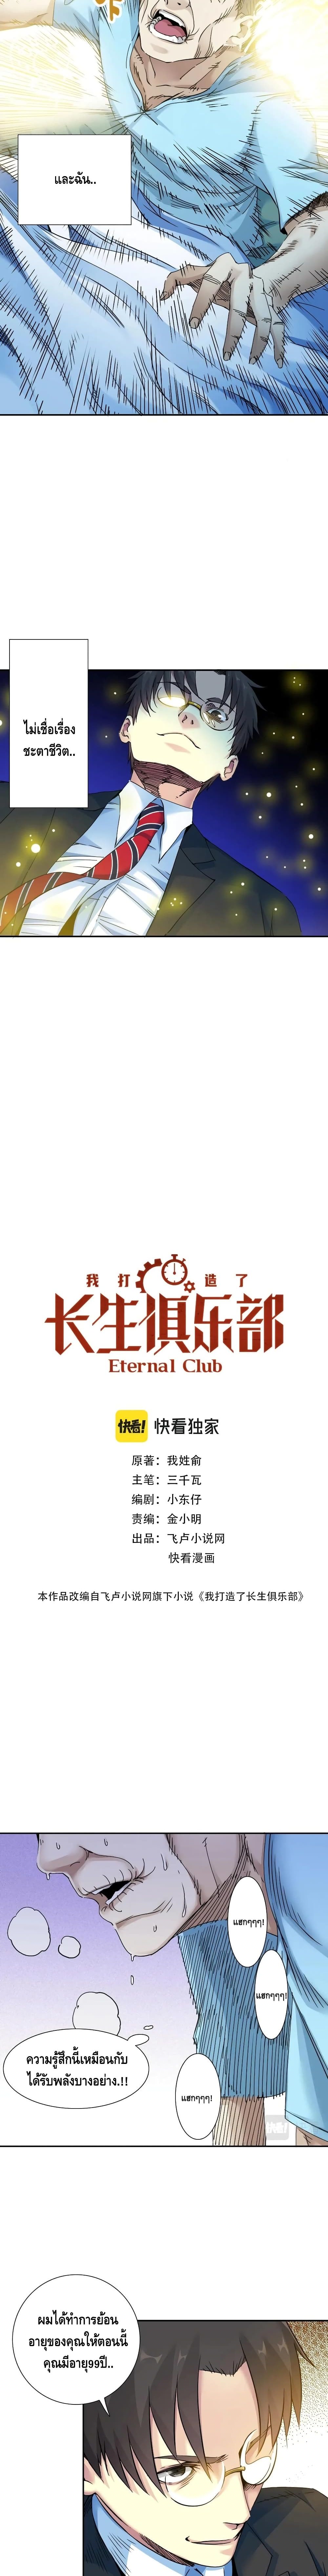 The Eternal Club 31 (4)